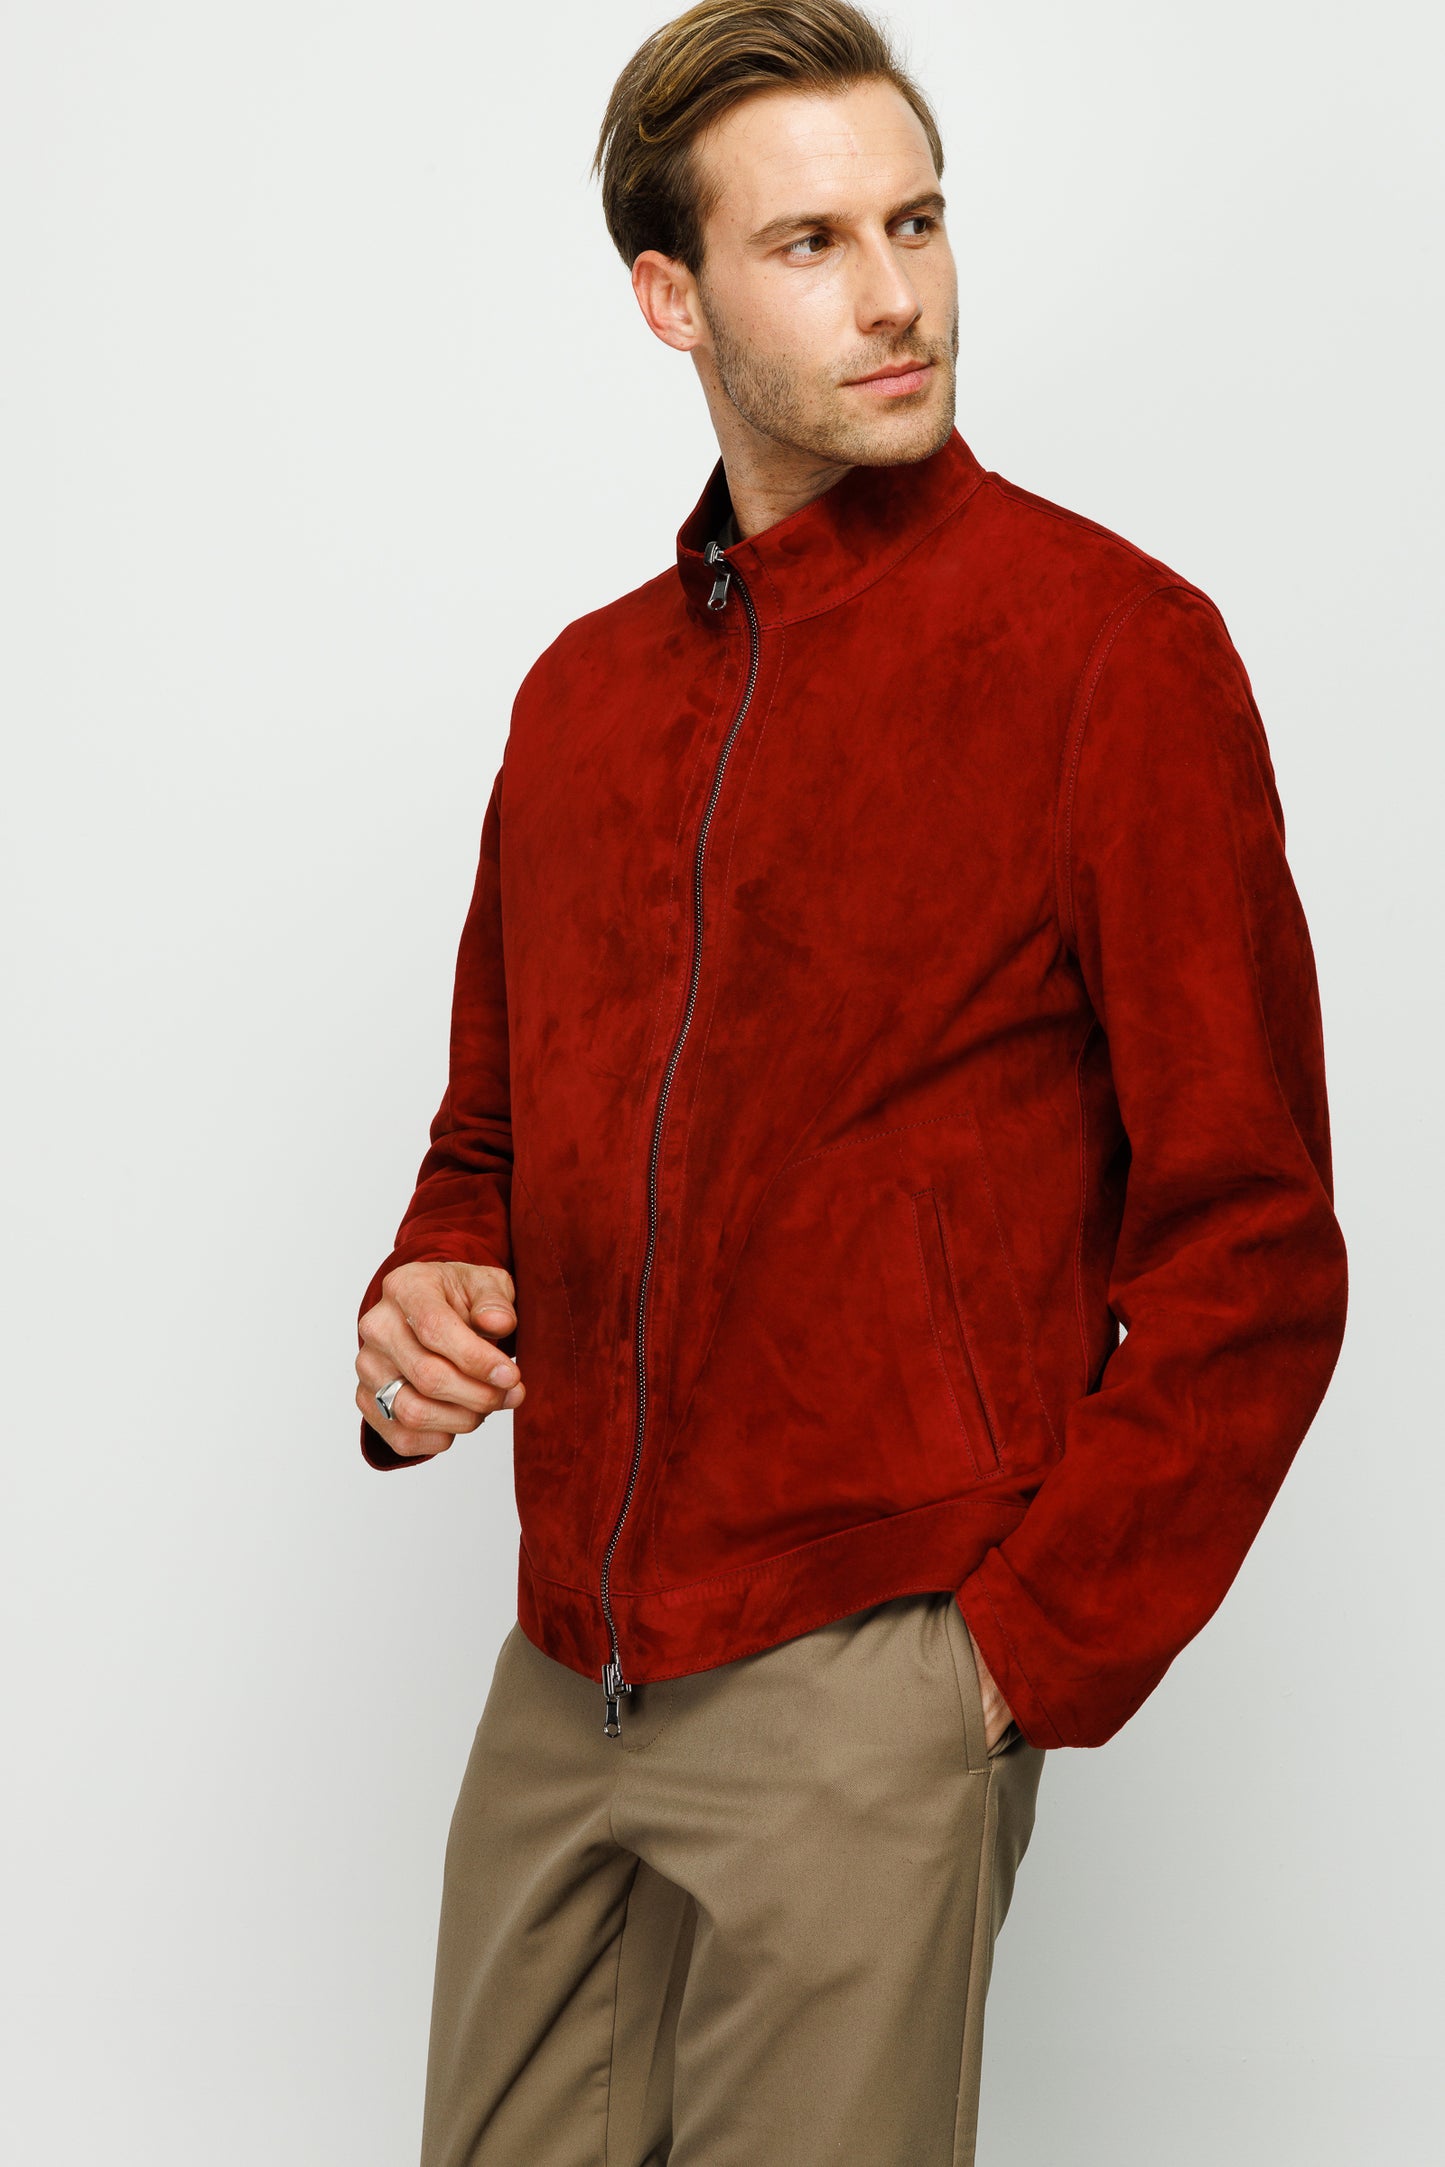 The Alba Burgundy Leather Men Jacket